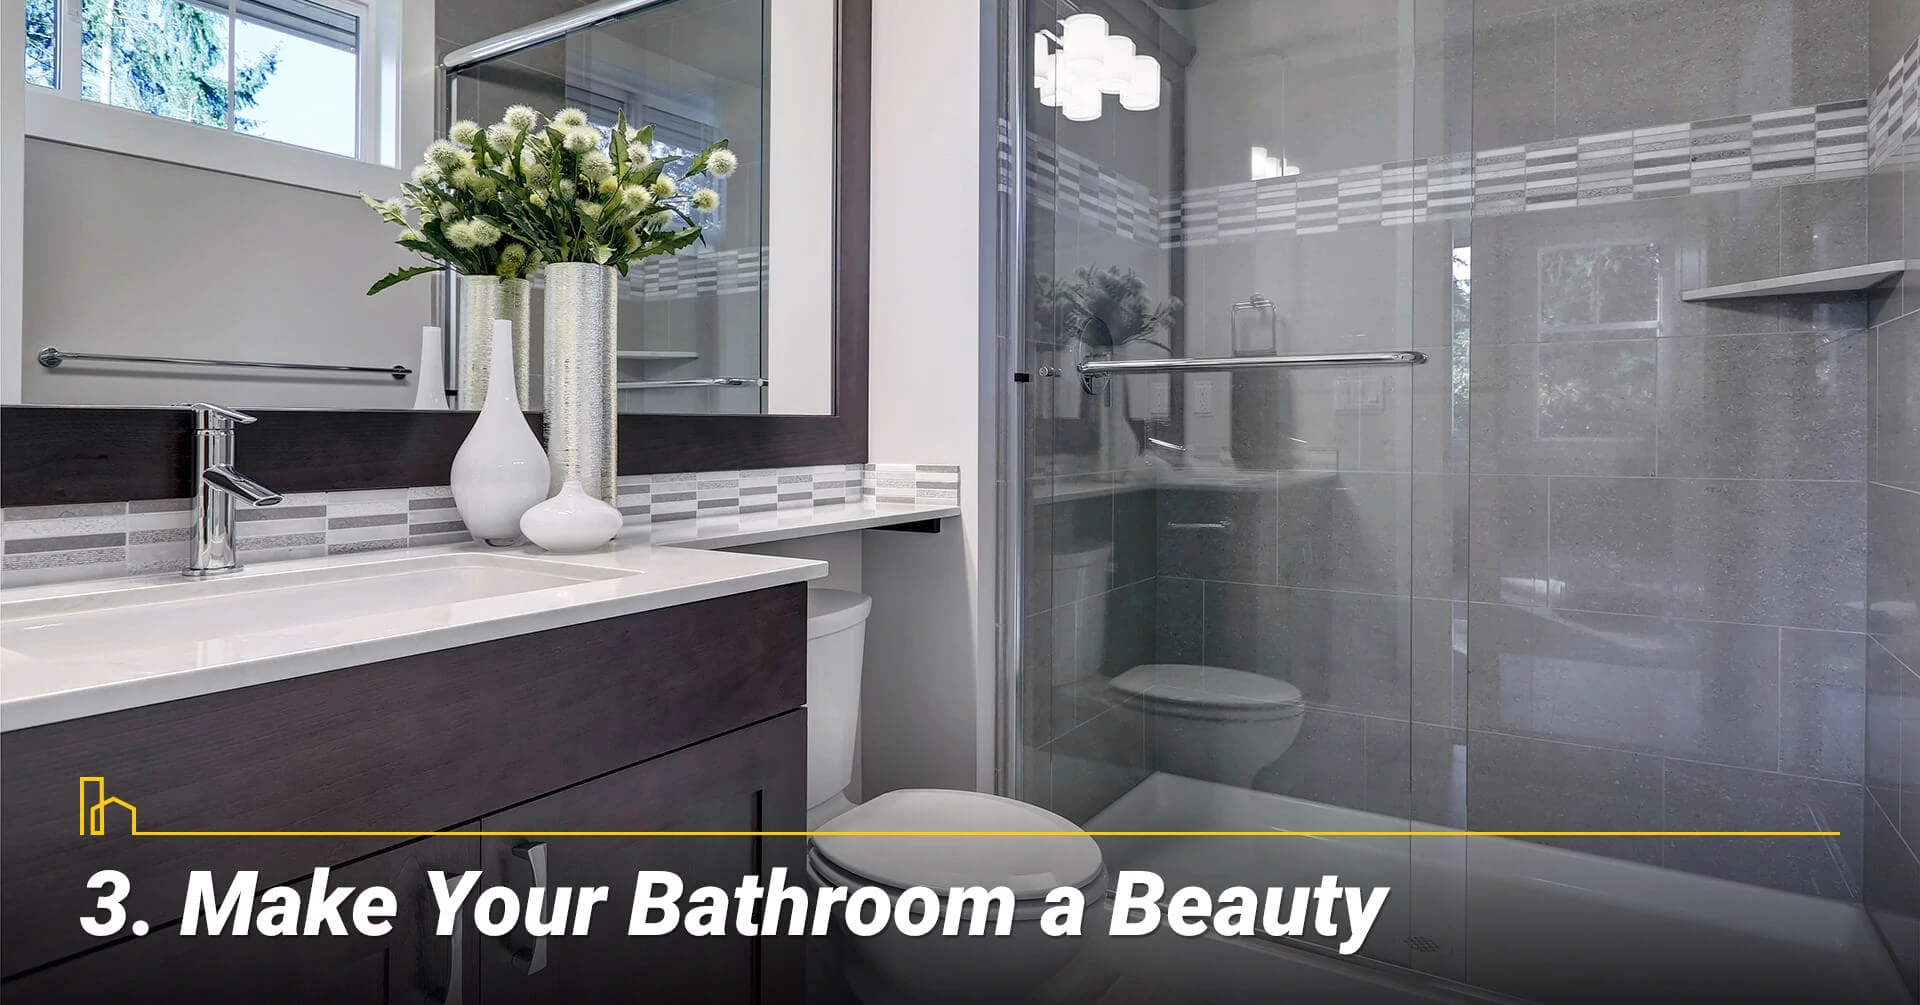 Make Your Bathroom a Beauty, upgrade you bathroom